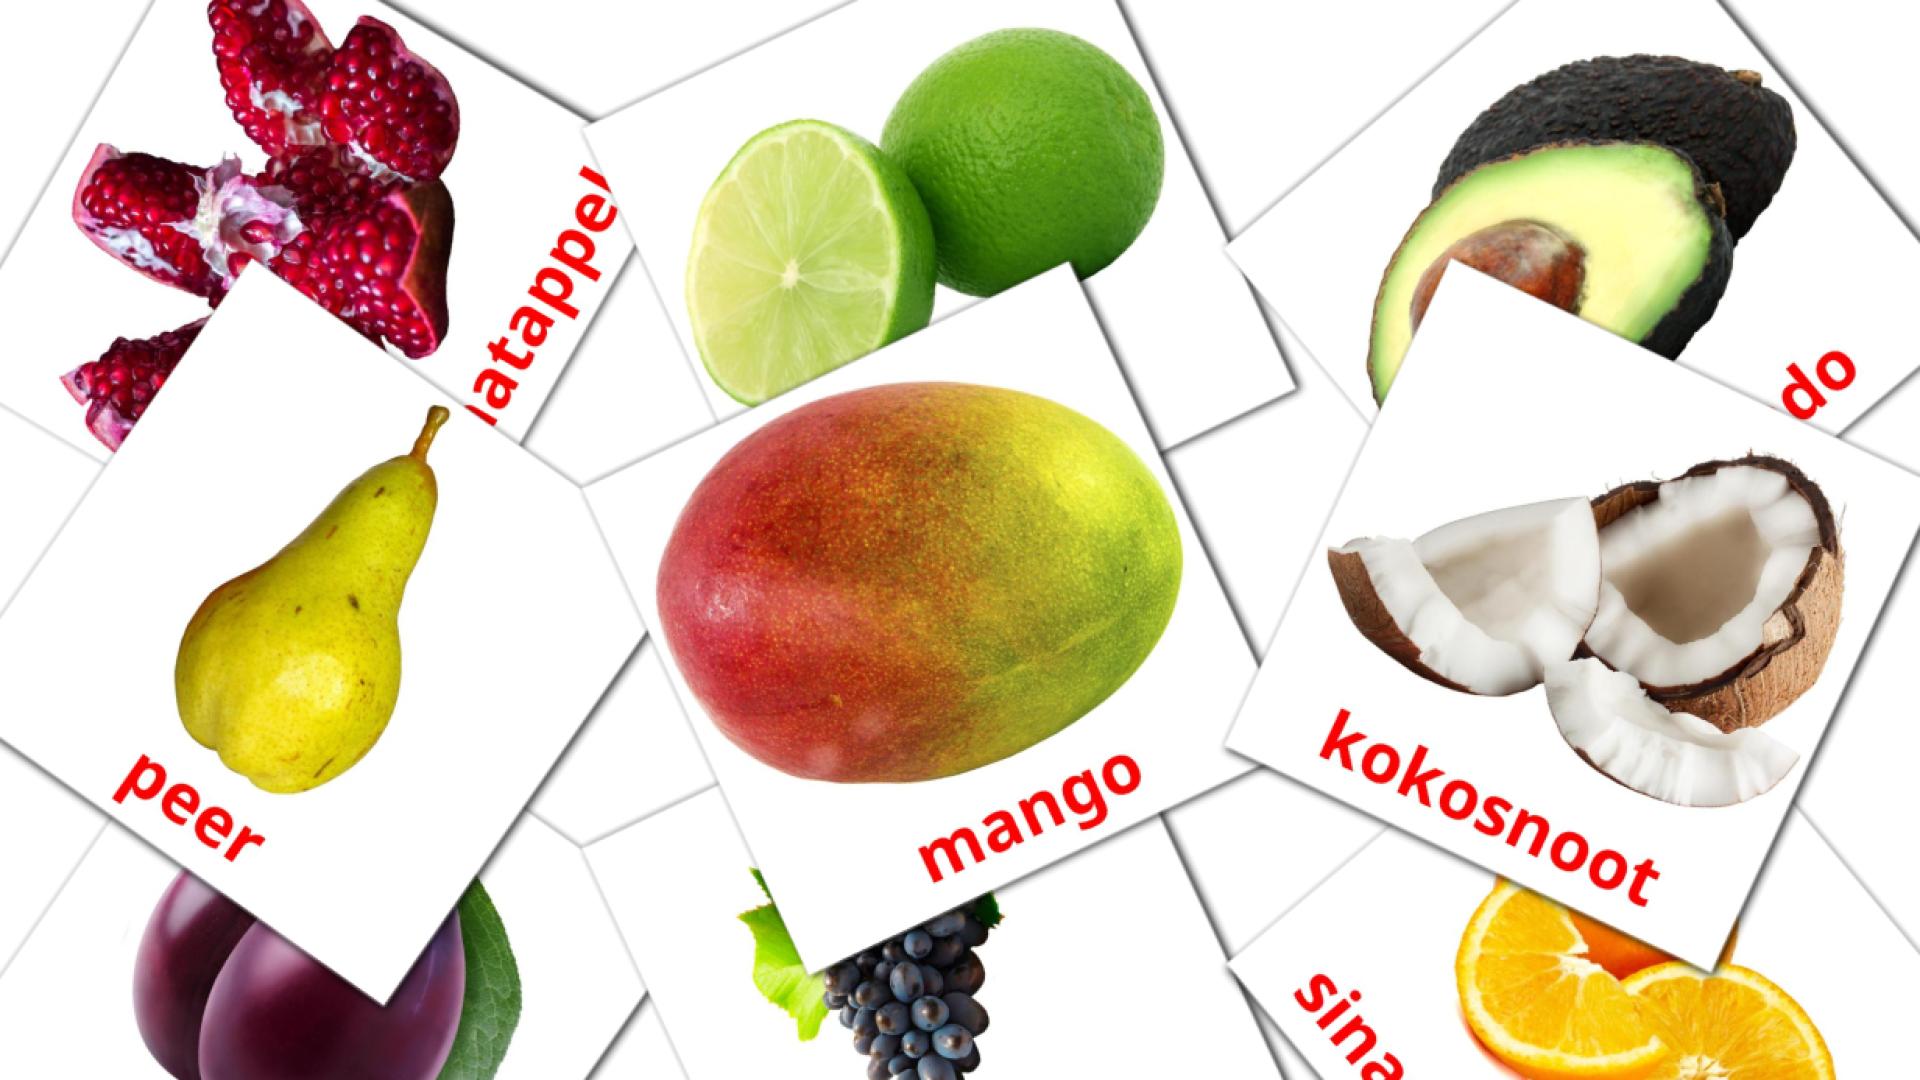 Imagiers Fruit 